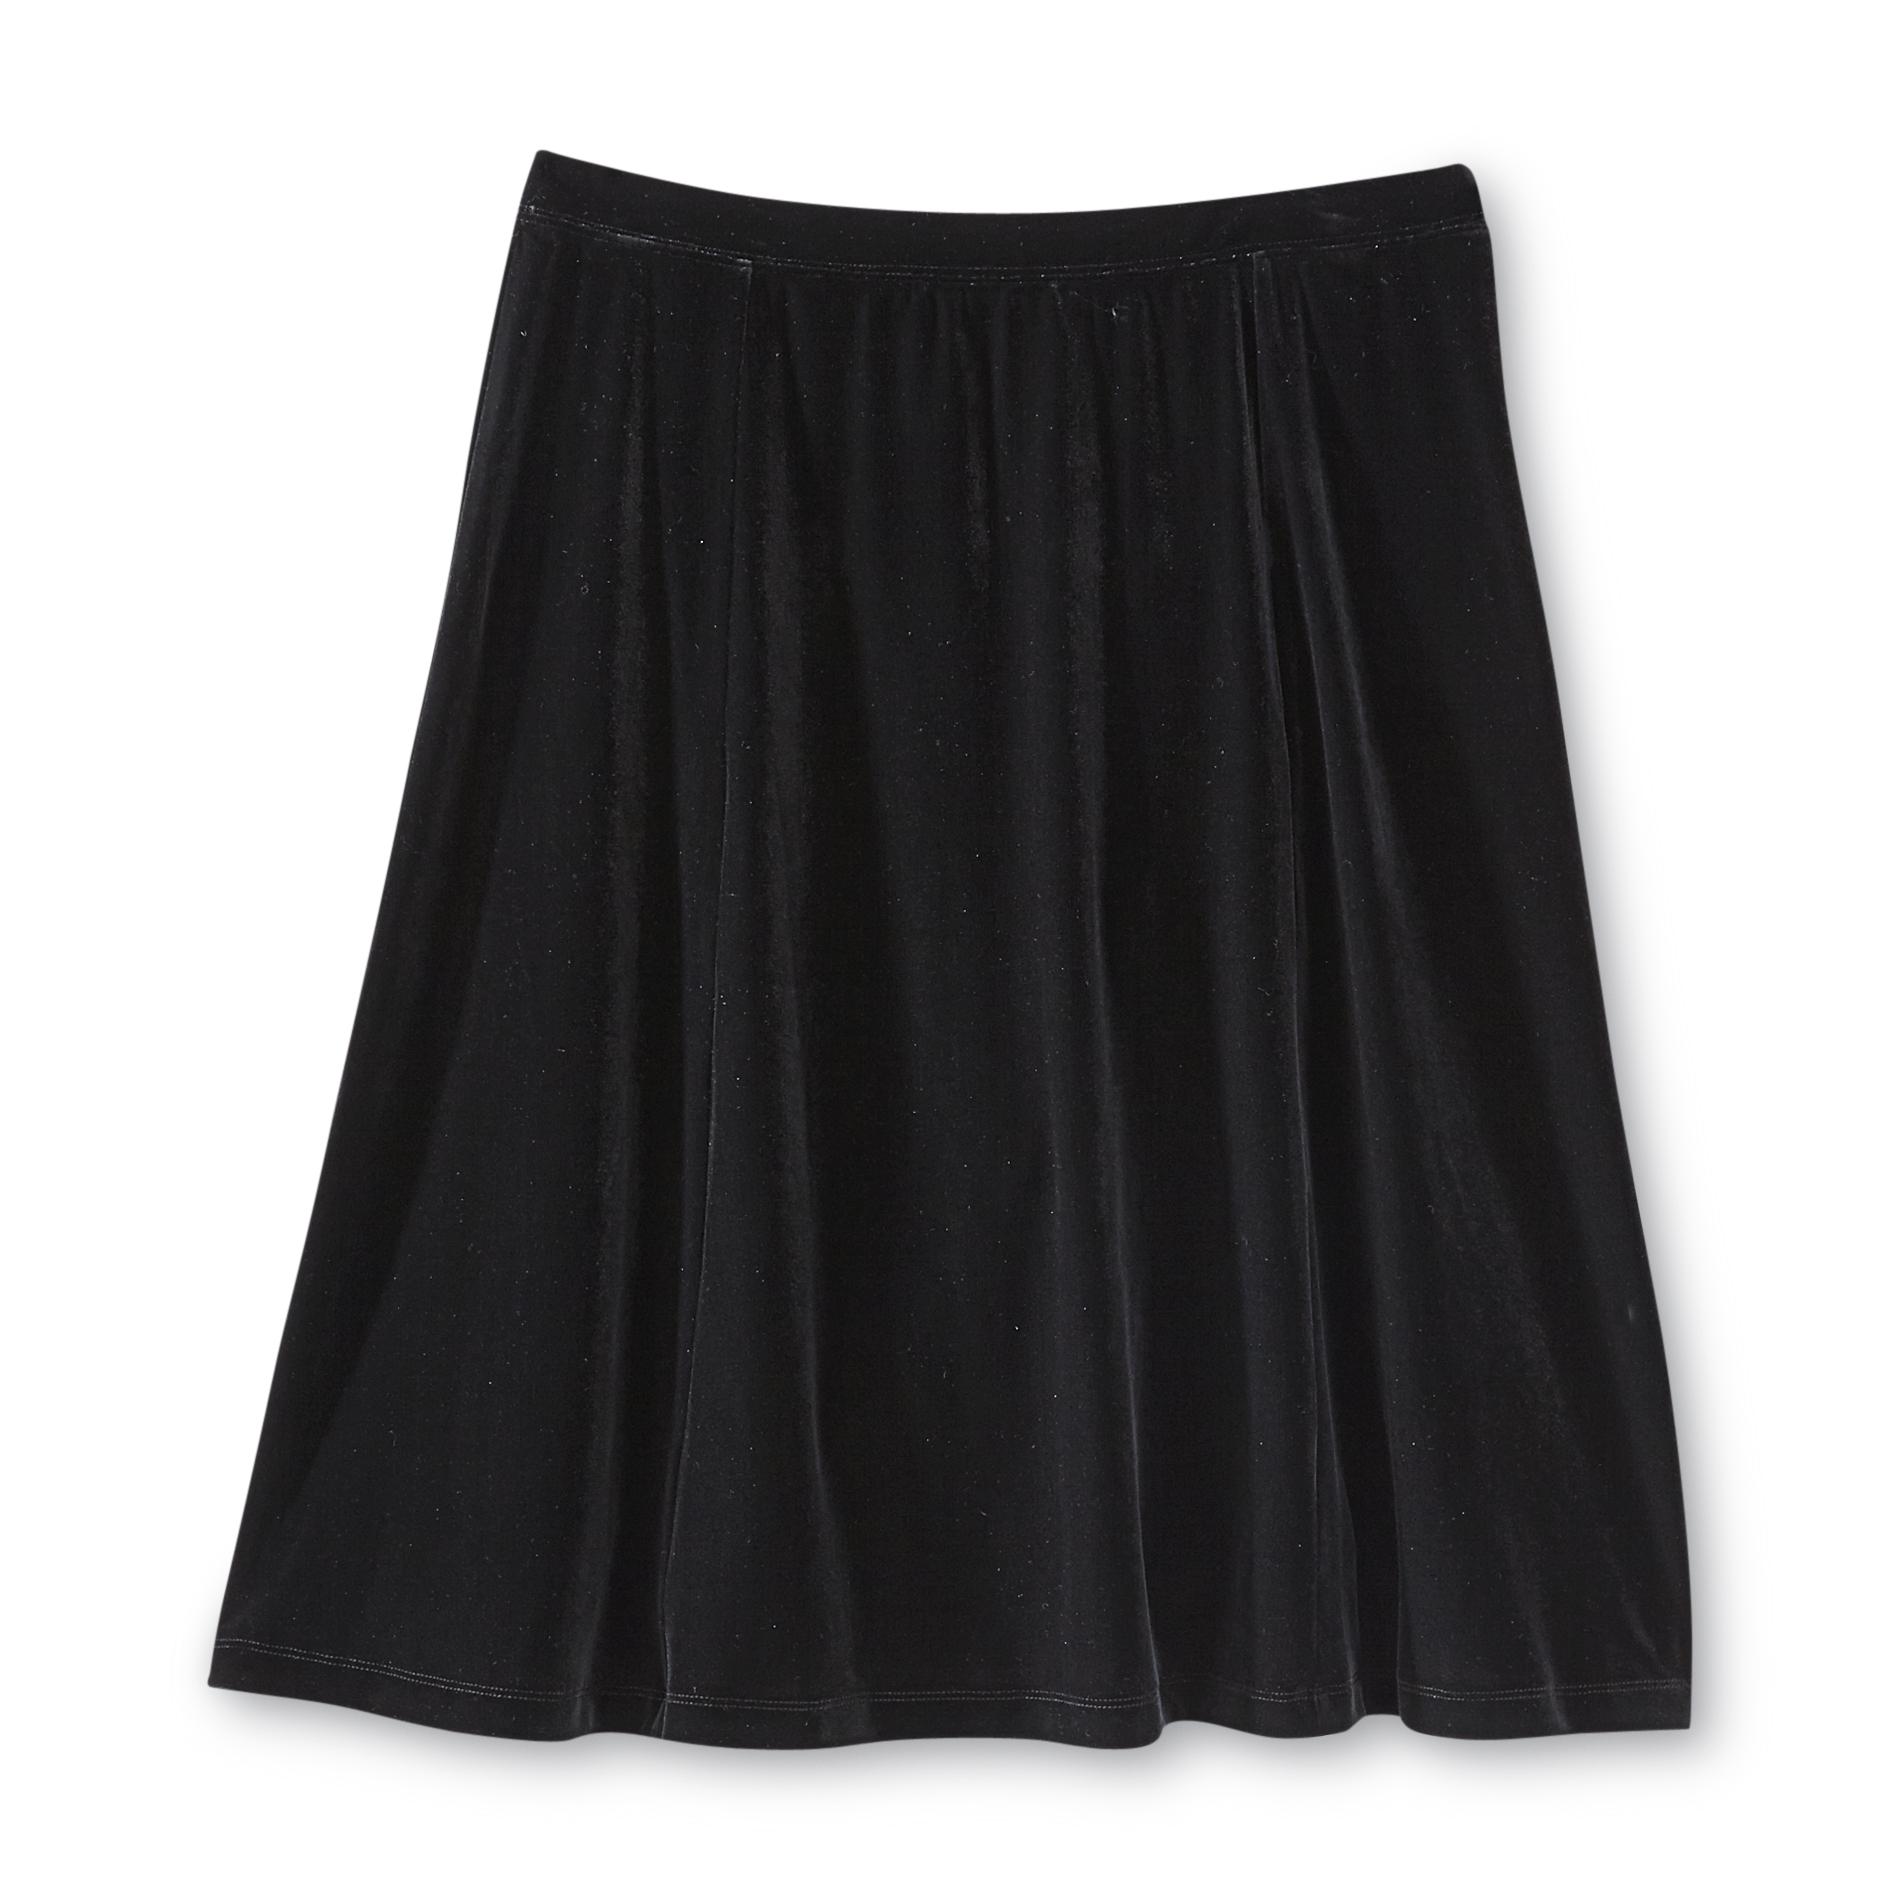 Jaclyn Smith Women's Velour A-Line Skirt